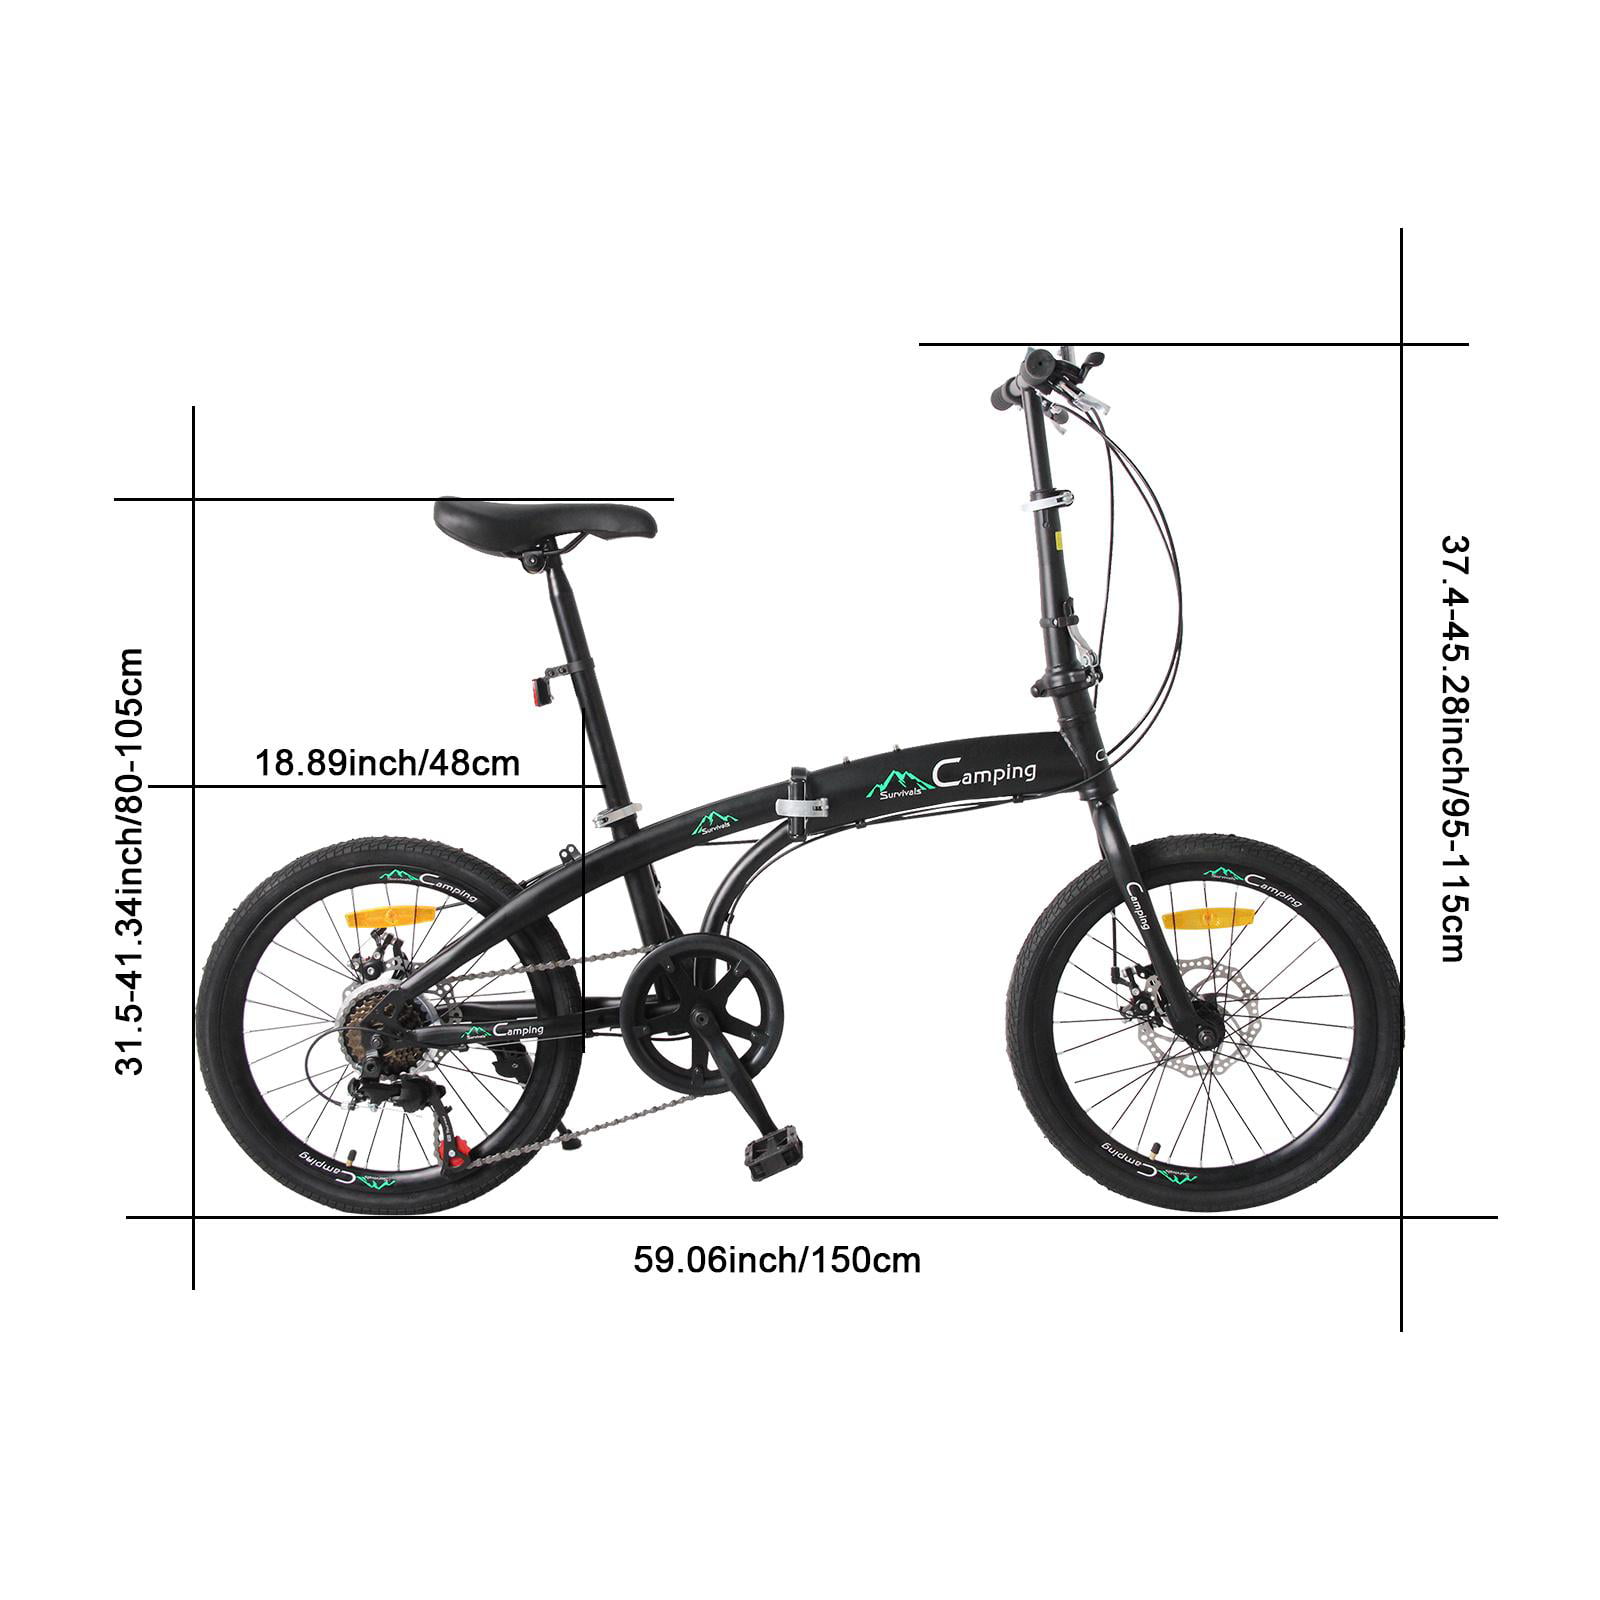 Details about   Folding Bike 20" Full Suspension Bicycle 7 Speed Bike w/Adjustable Seat Black US 